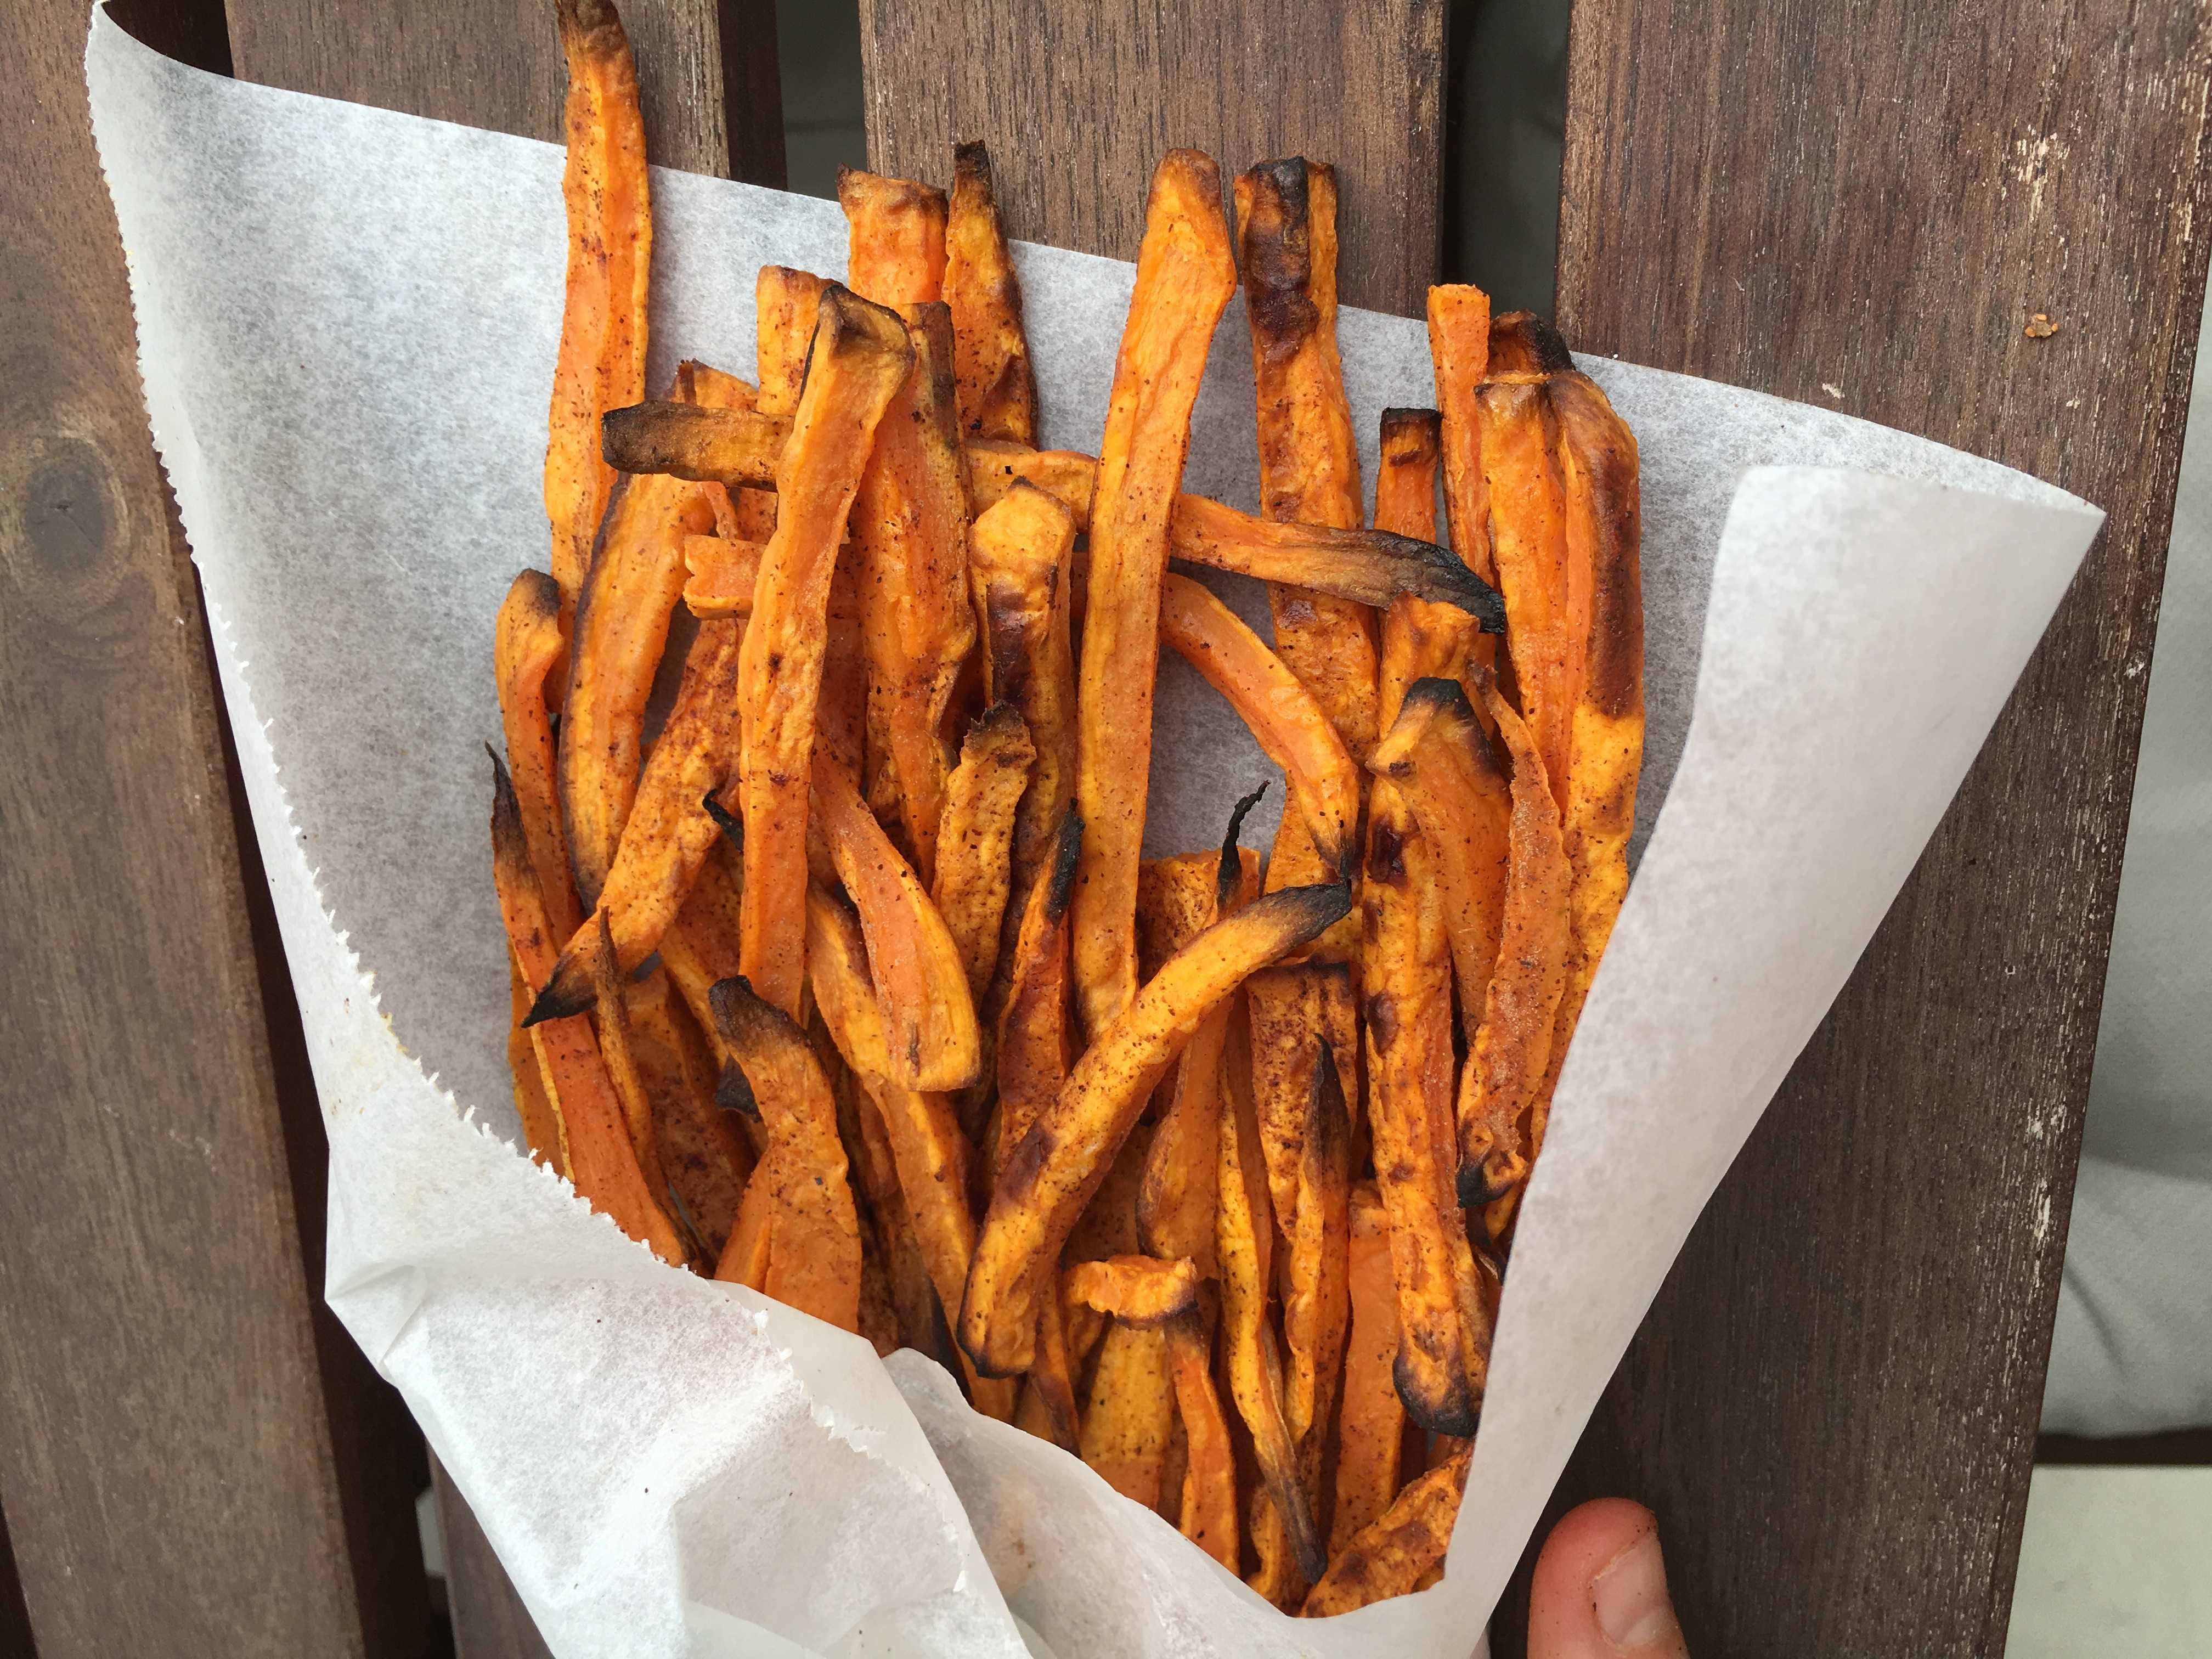 Cinnamon Sweet Potato Fries